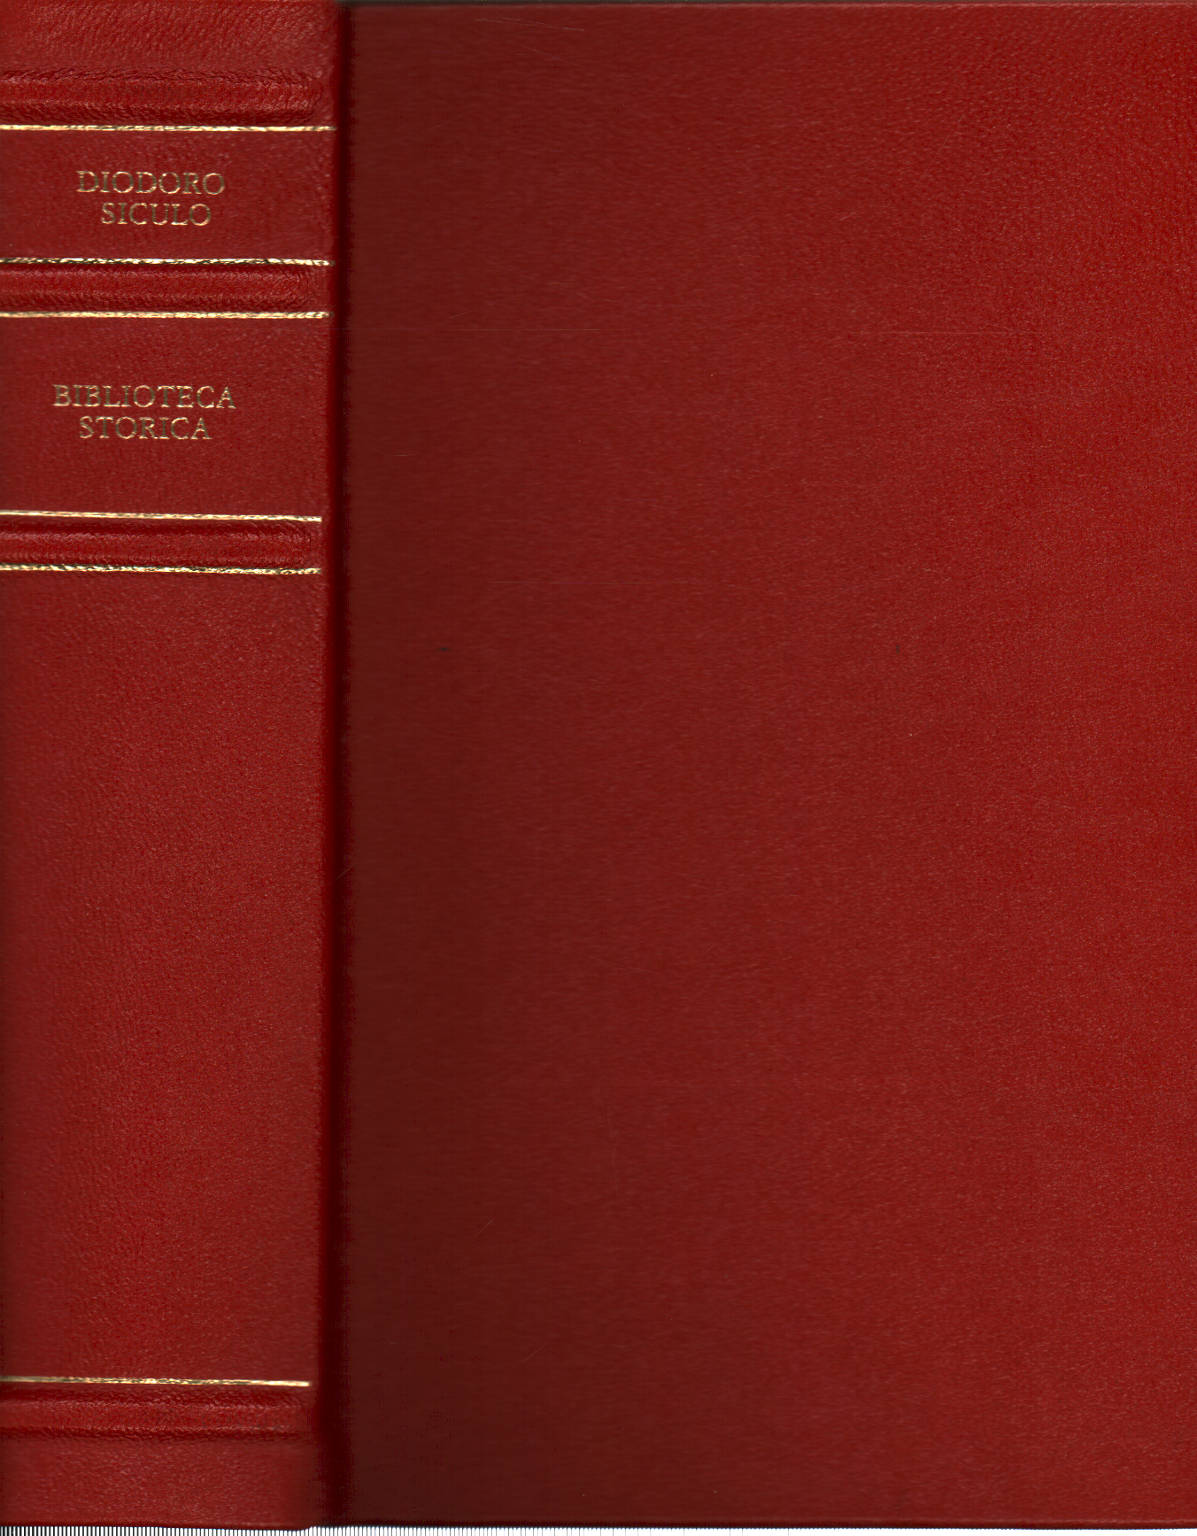 Biblioteca storica. Libri XIV-XVII